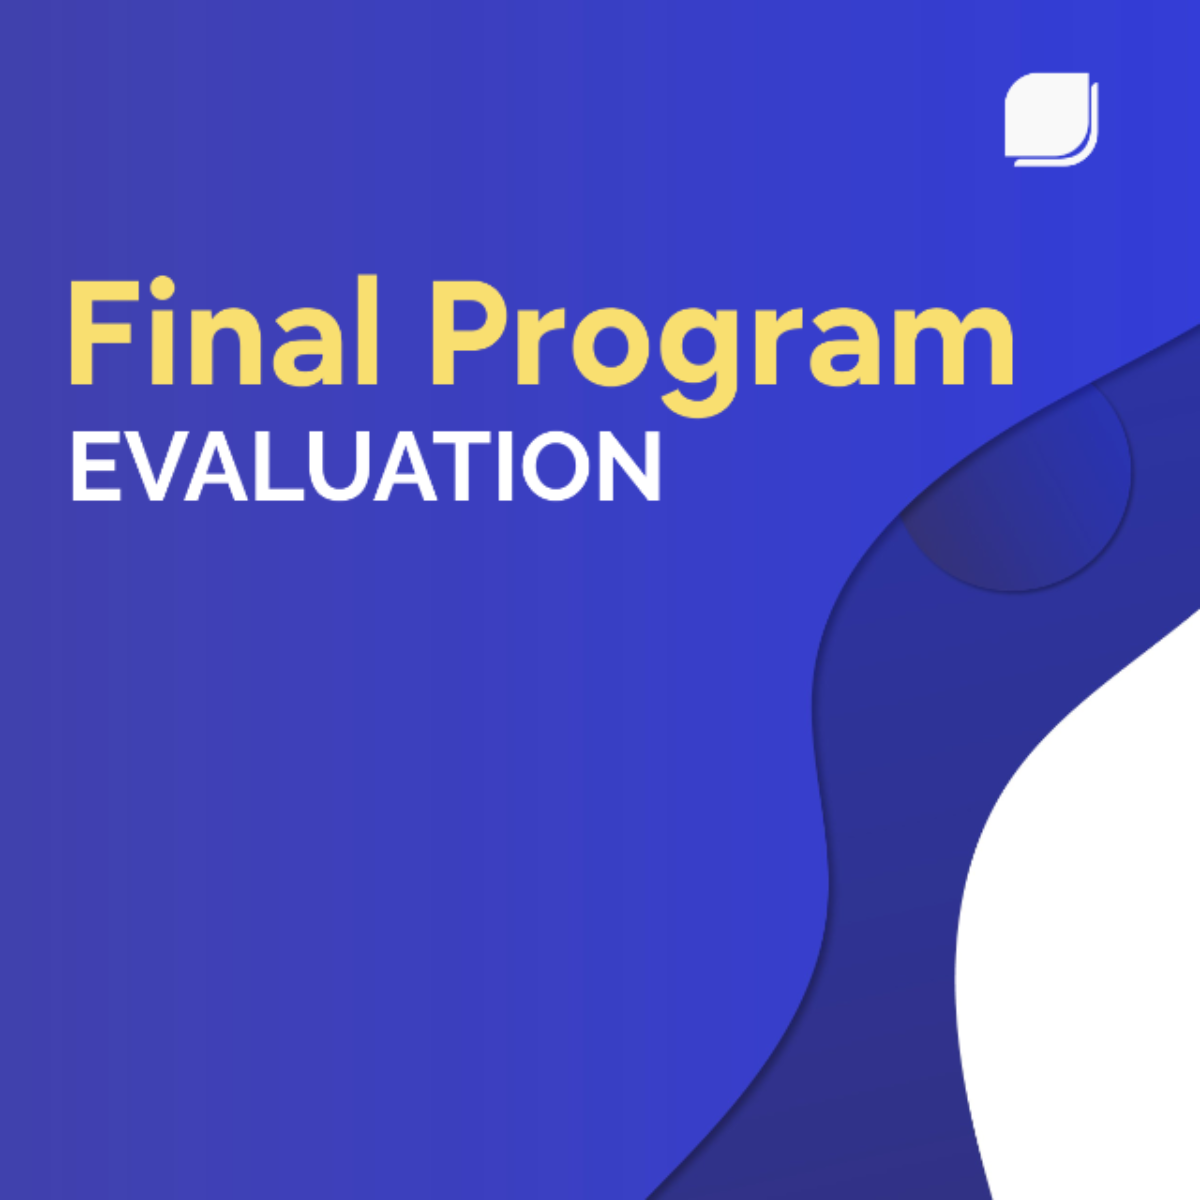 Final Program Evaluation Template